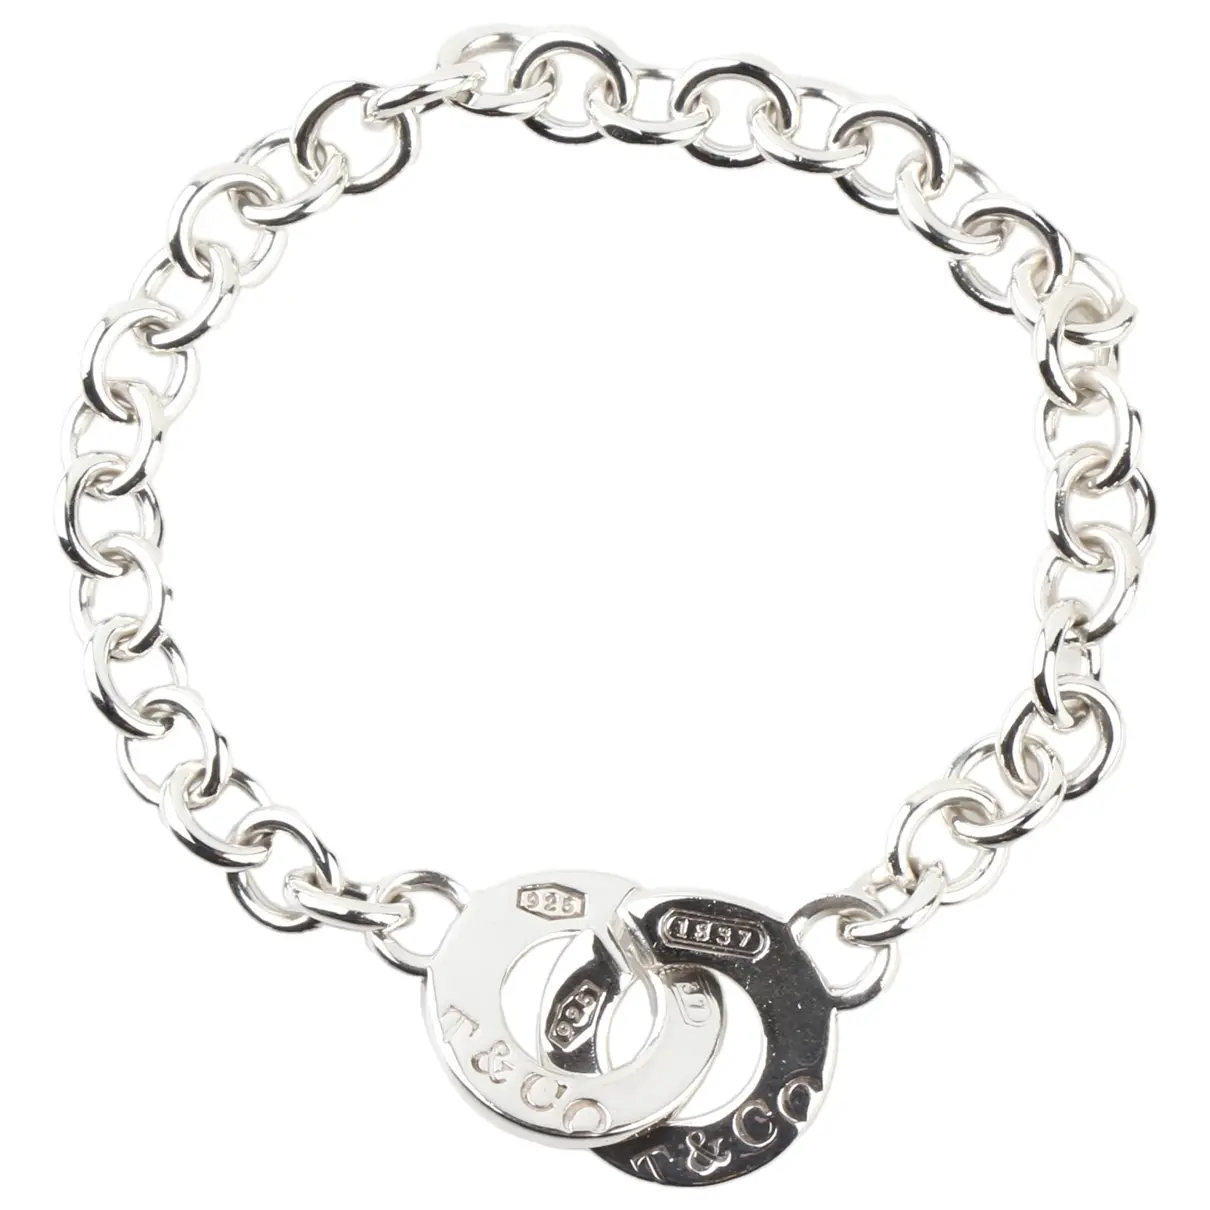 Tiffany 1837 silver bracelet